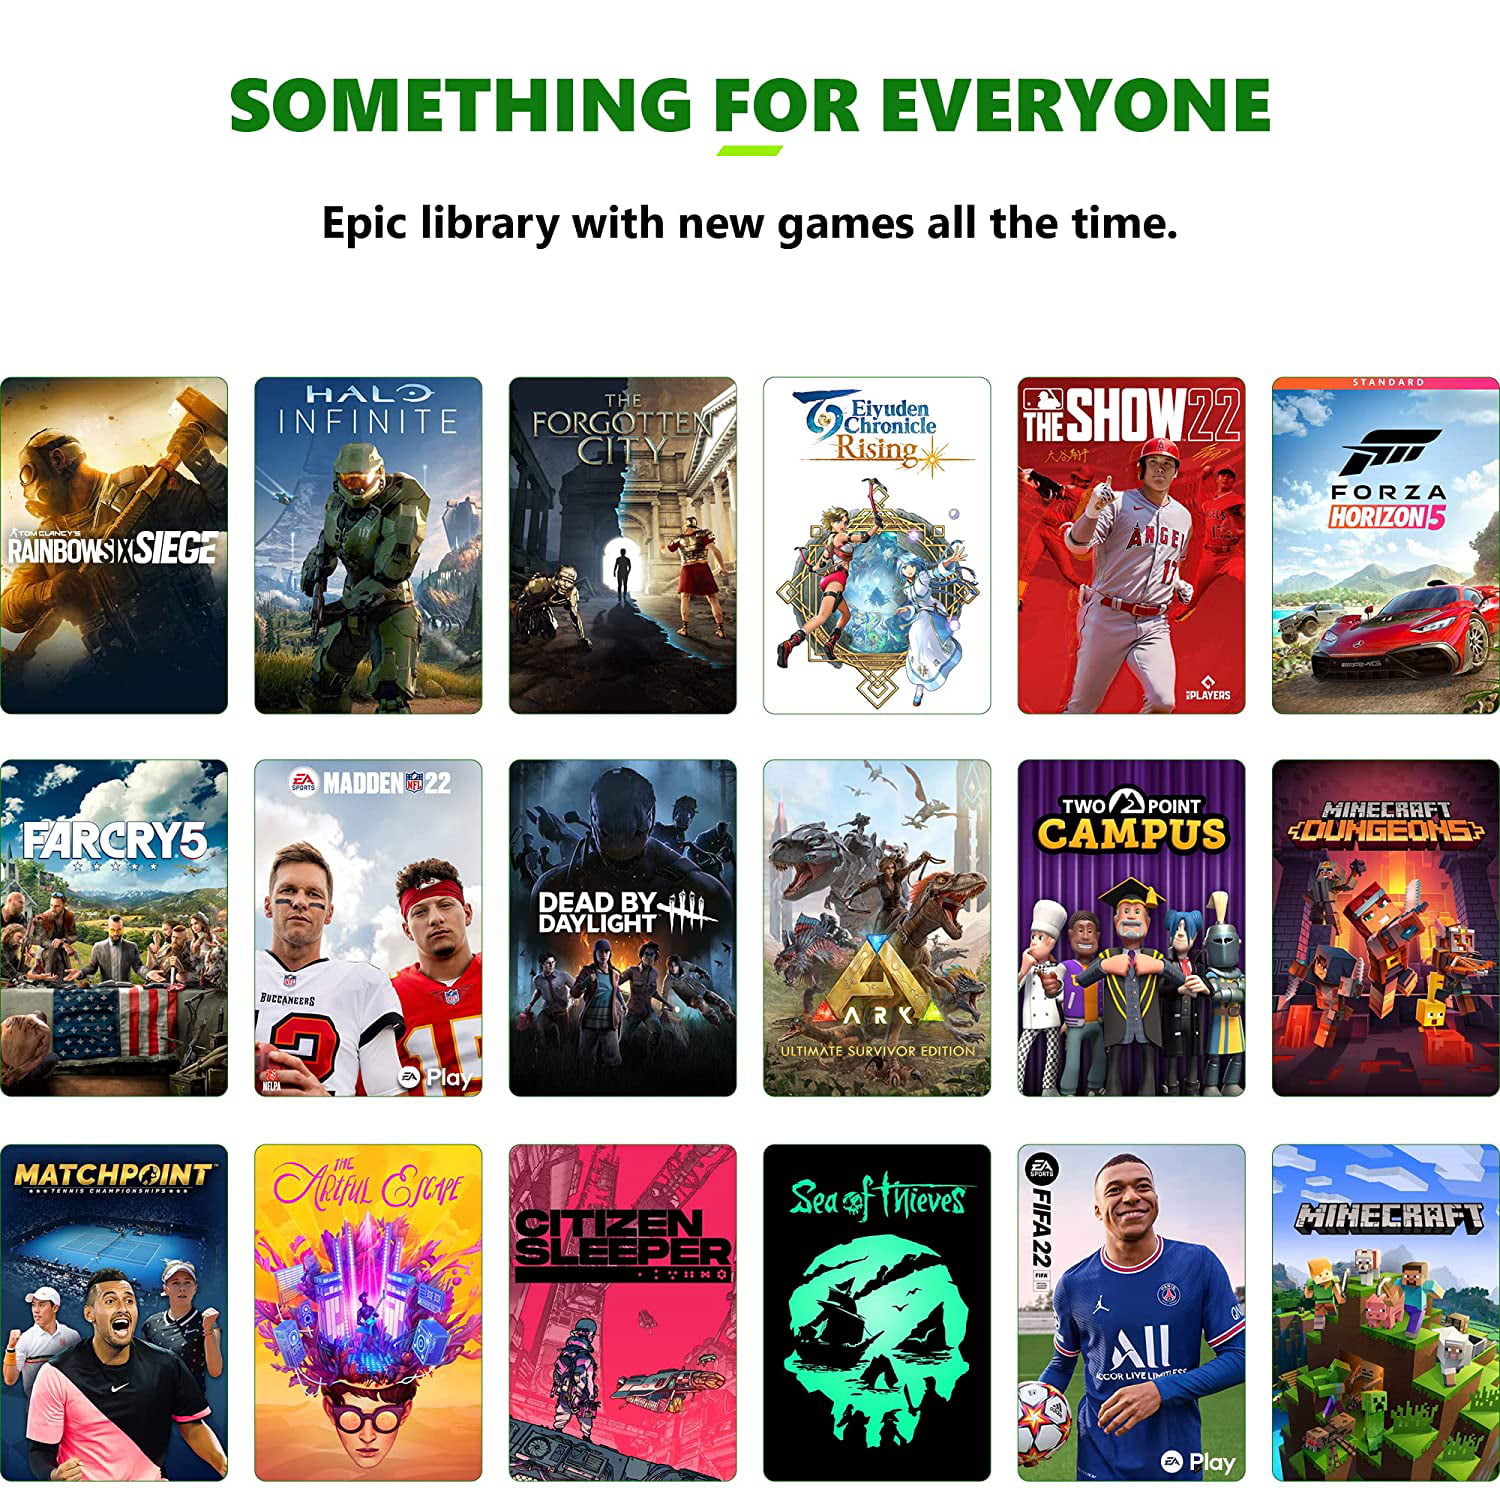 Xbox Game Pass - Microsoft Community